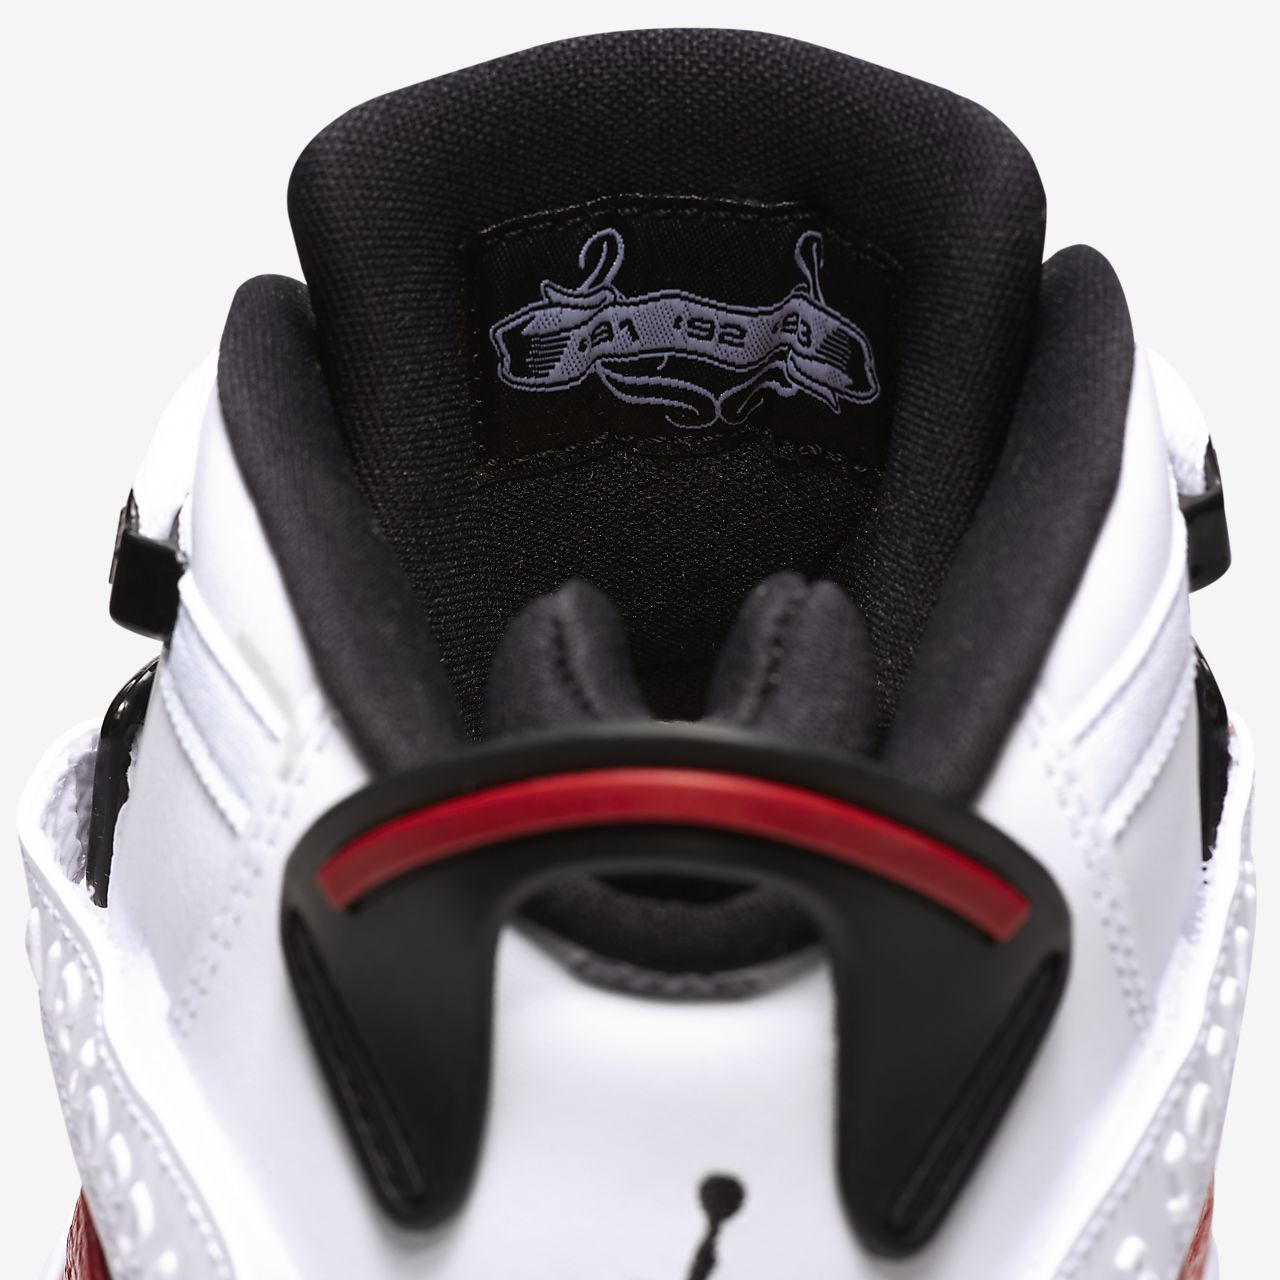 Mens Air Jordan 9 Commemorative Edition White Black Red shoes